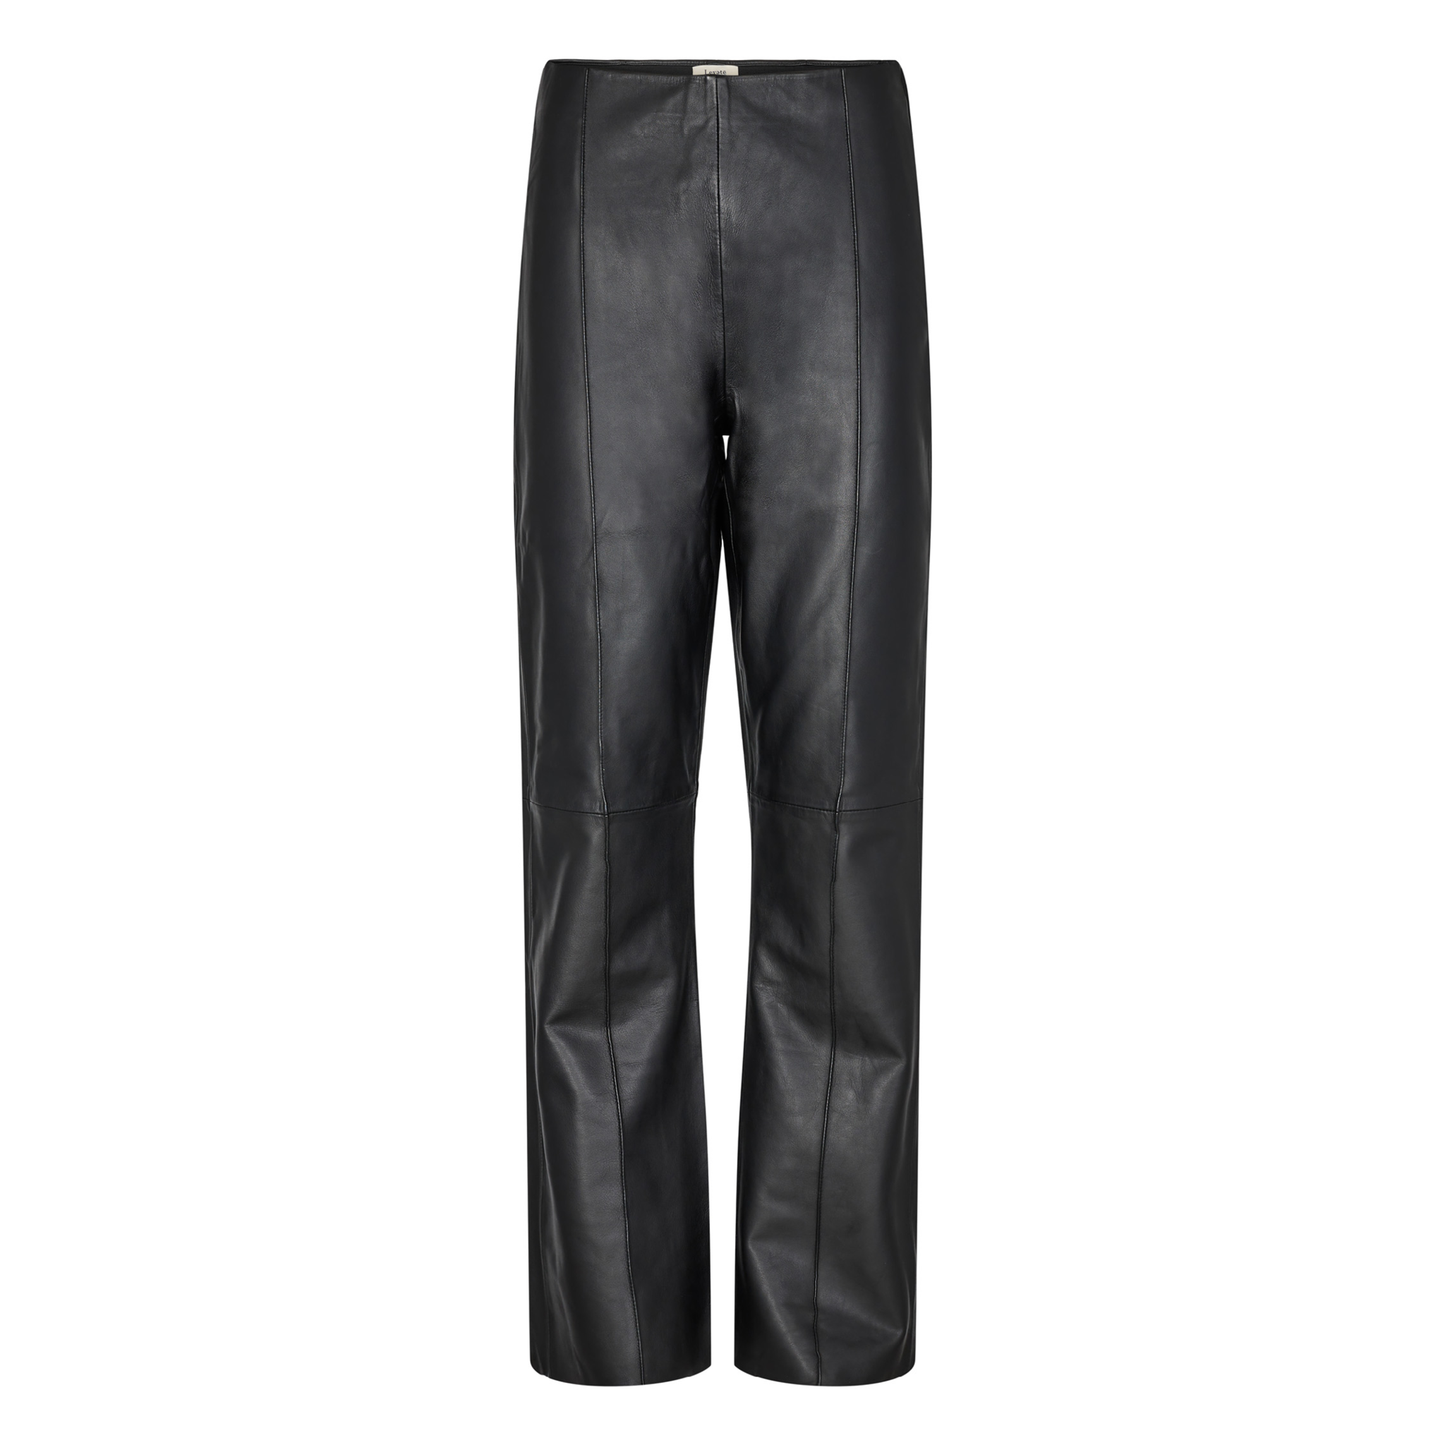 Globa Leather Pants, Black